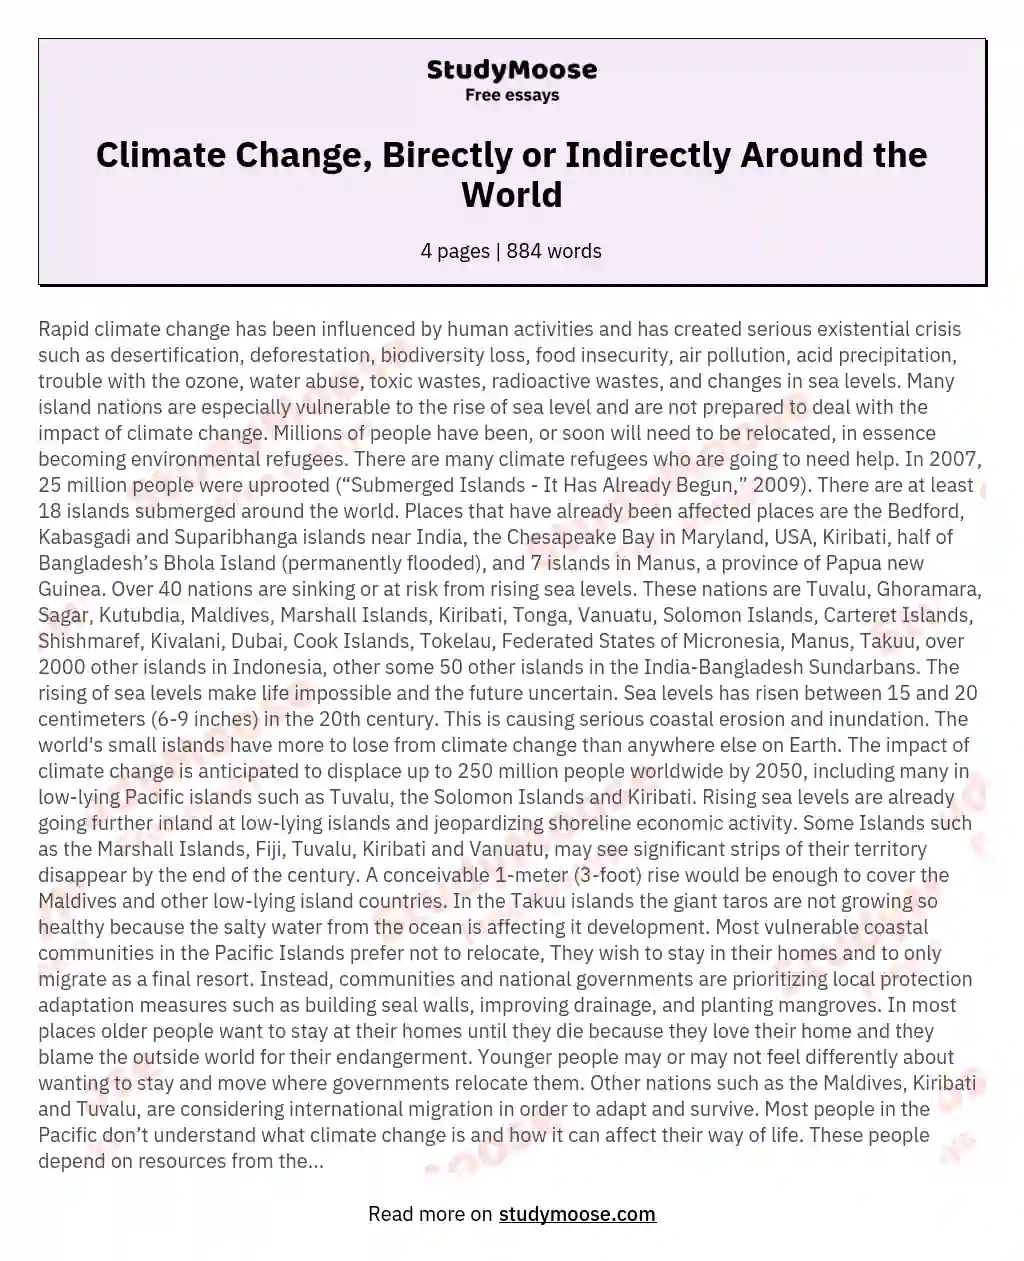 Climate Change, Birectly or Indirectly Around the World essay